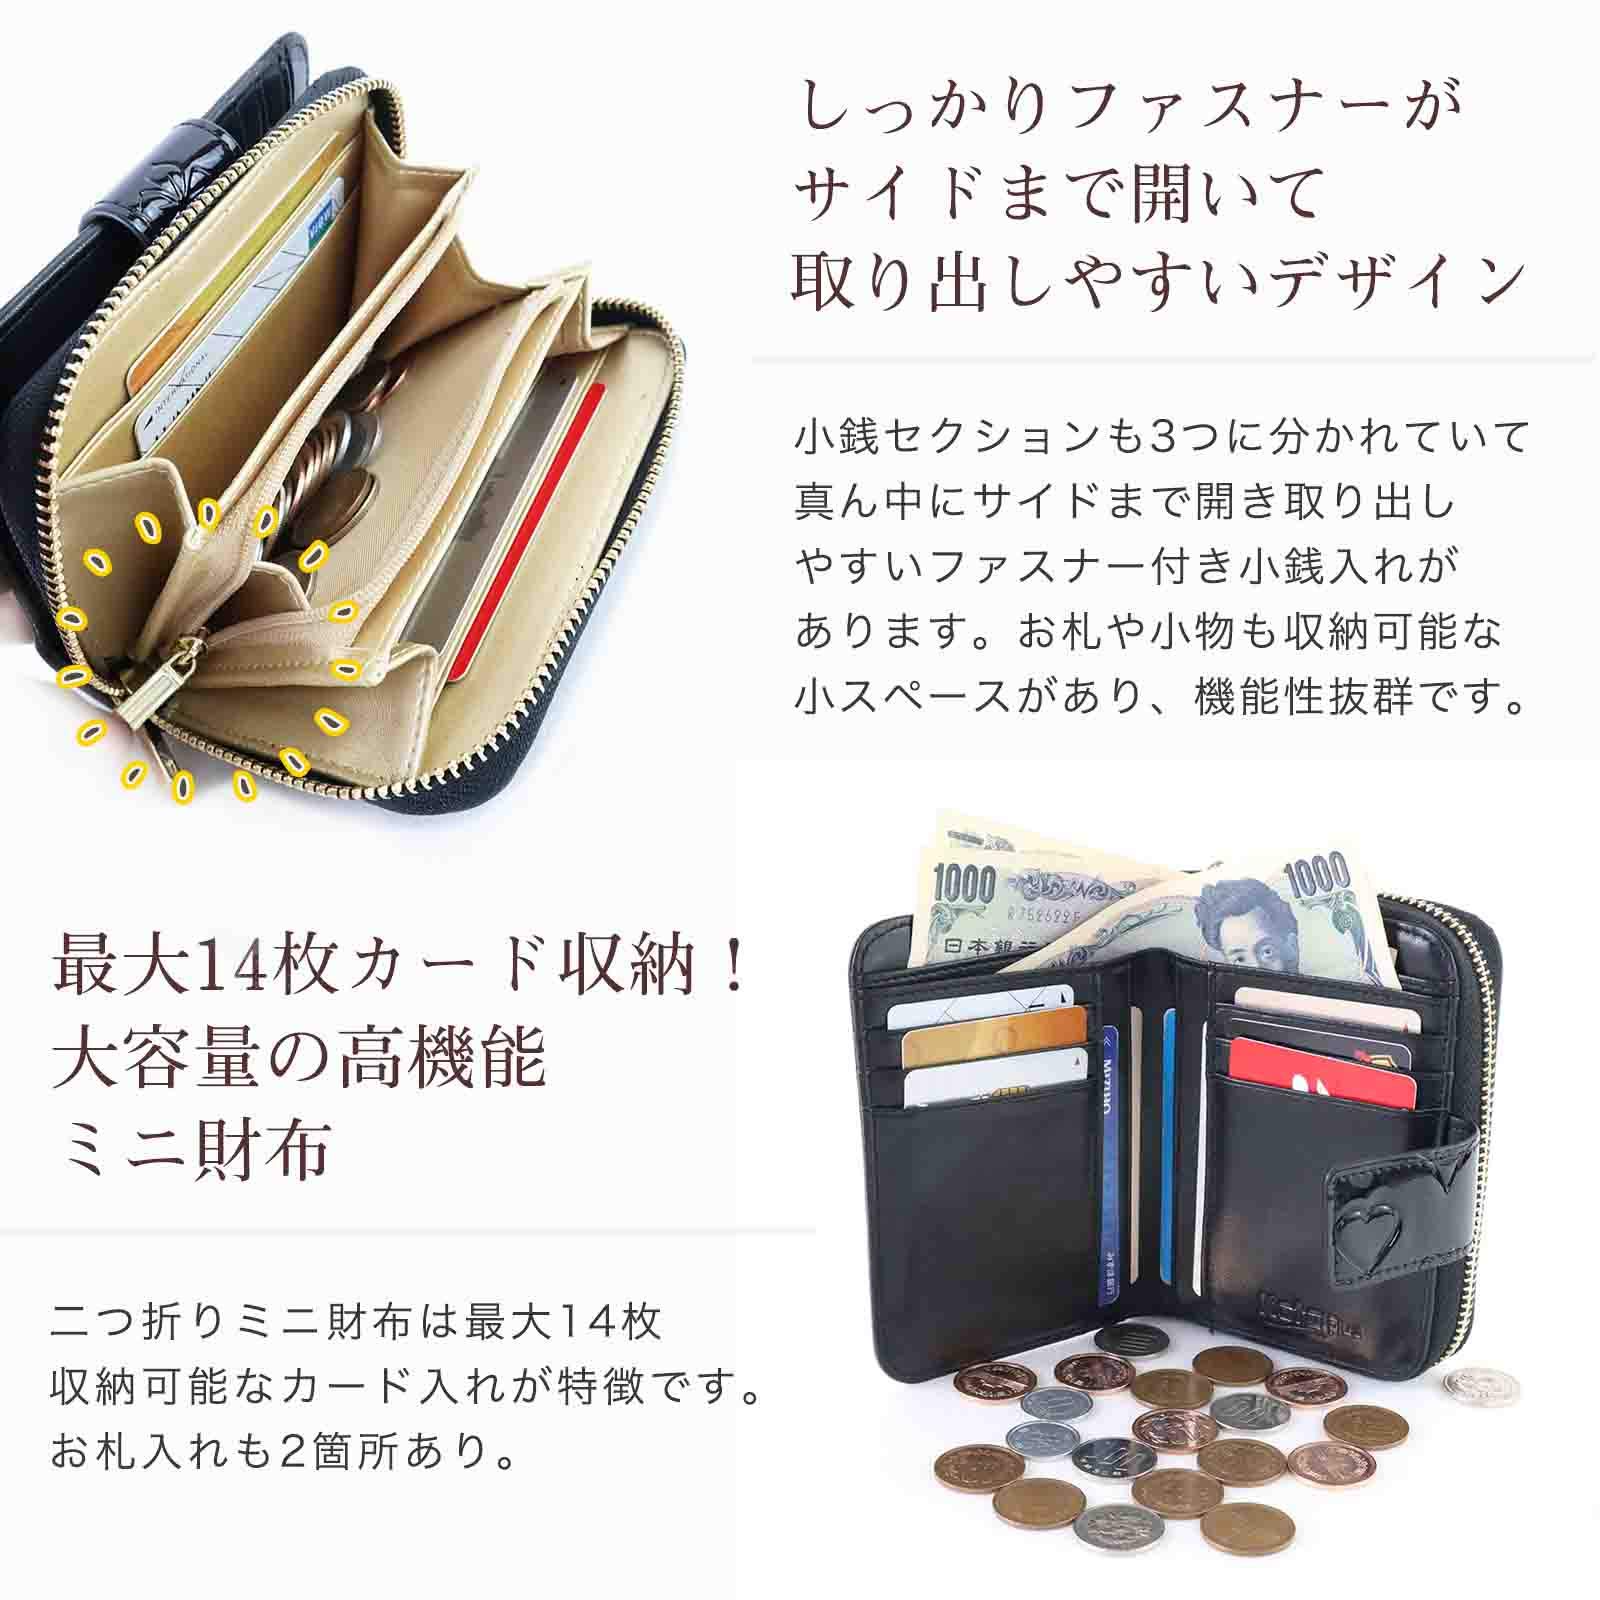 Kstarplus Japan] ミニ財布 レディース  本革 財布